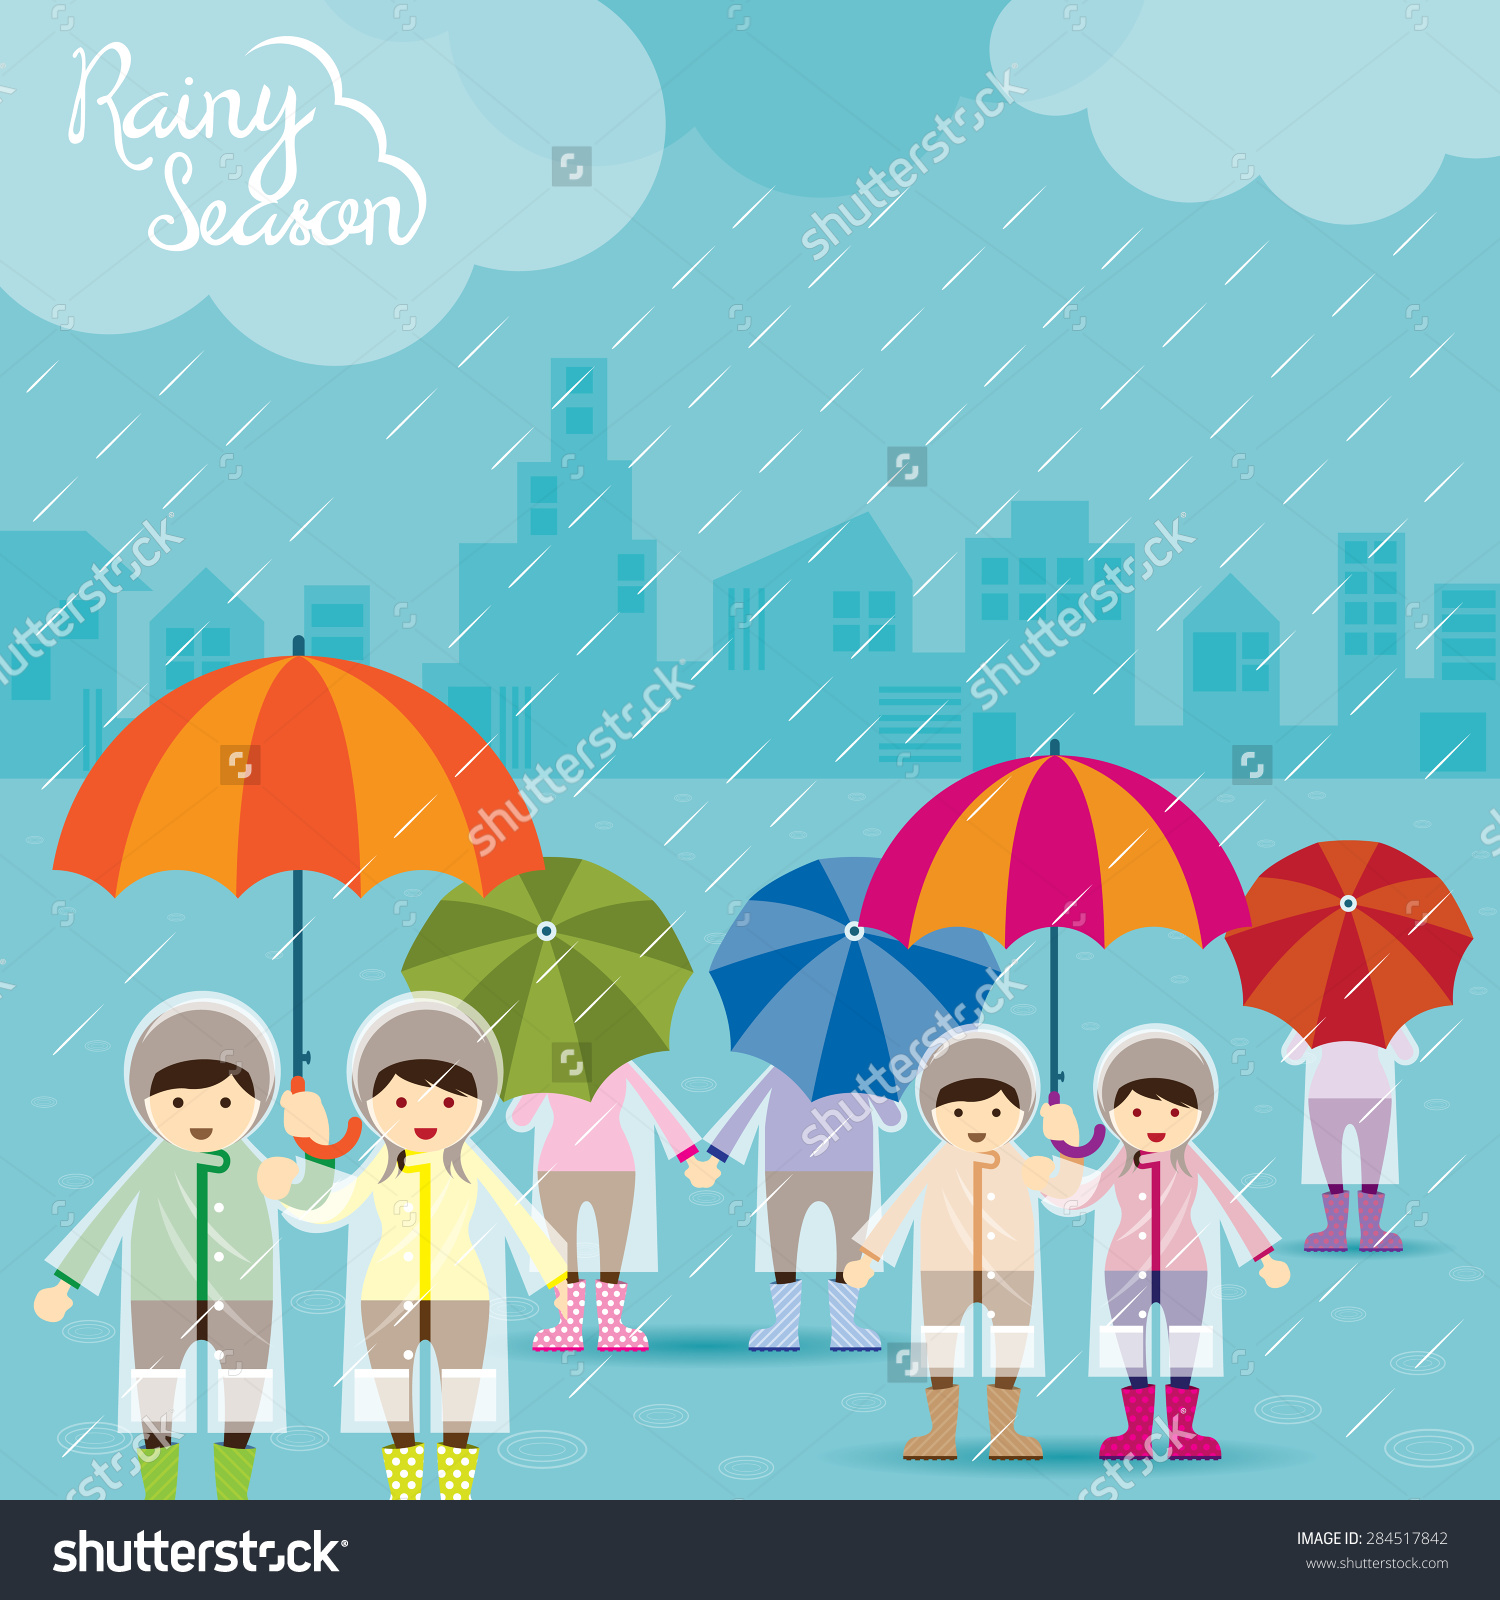 clip art images rainy season - photo #26